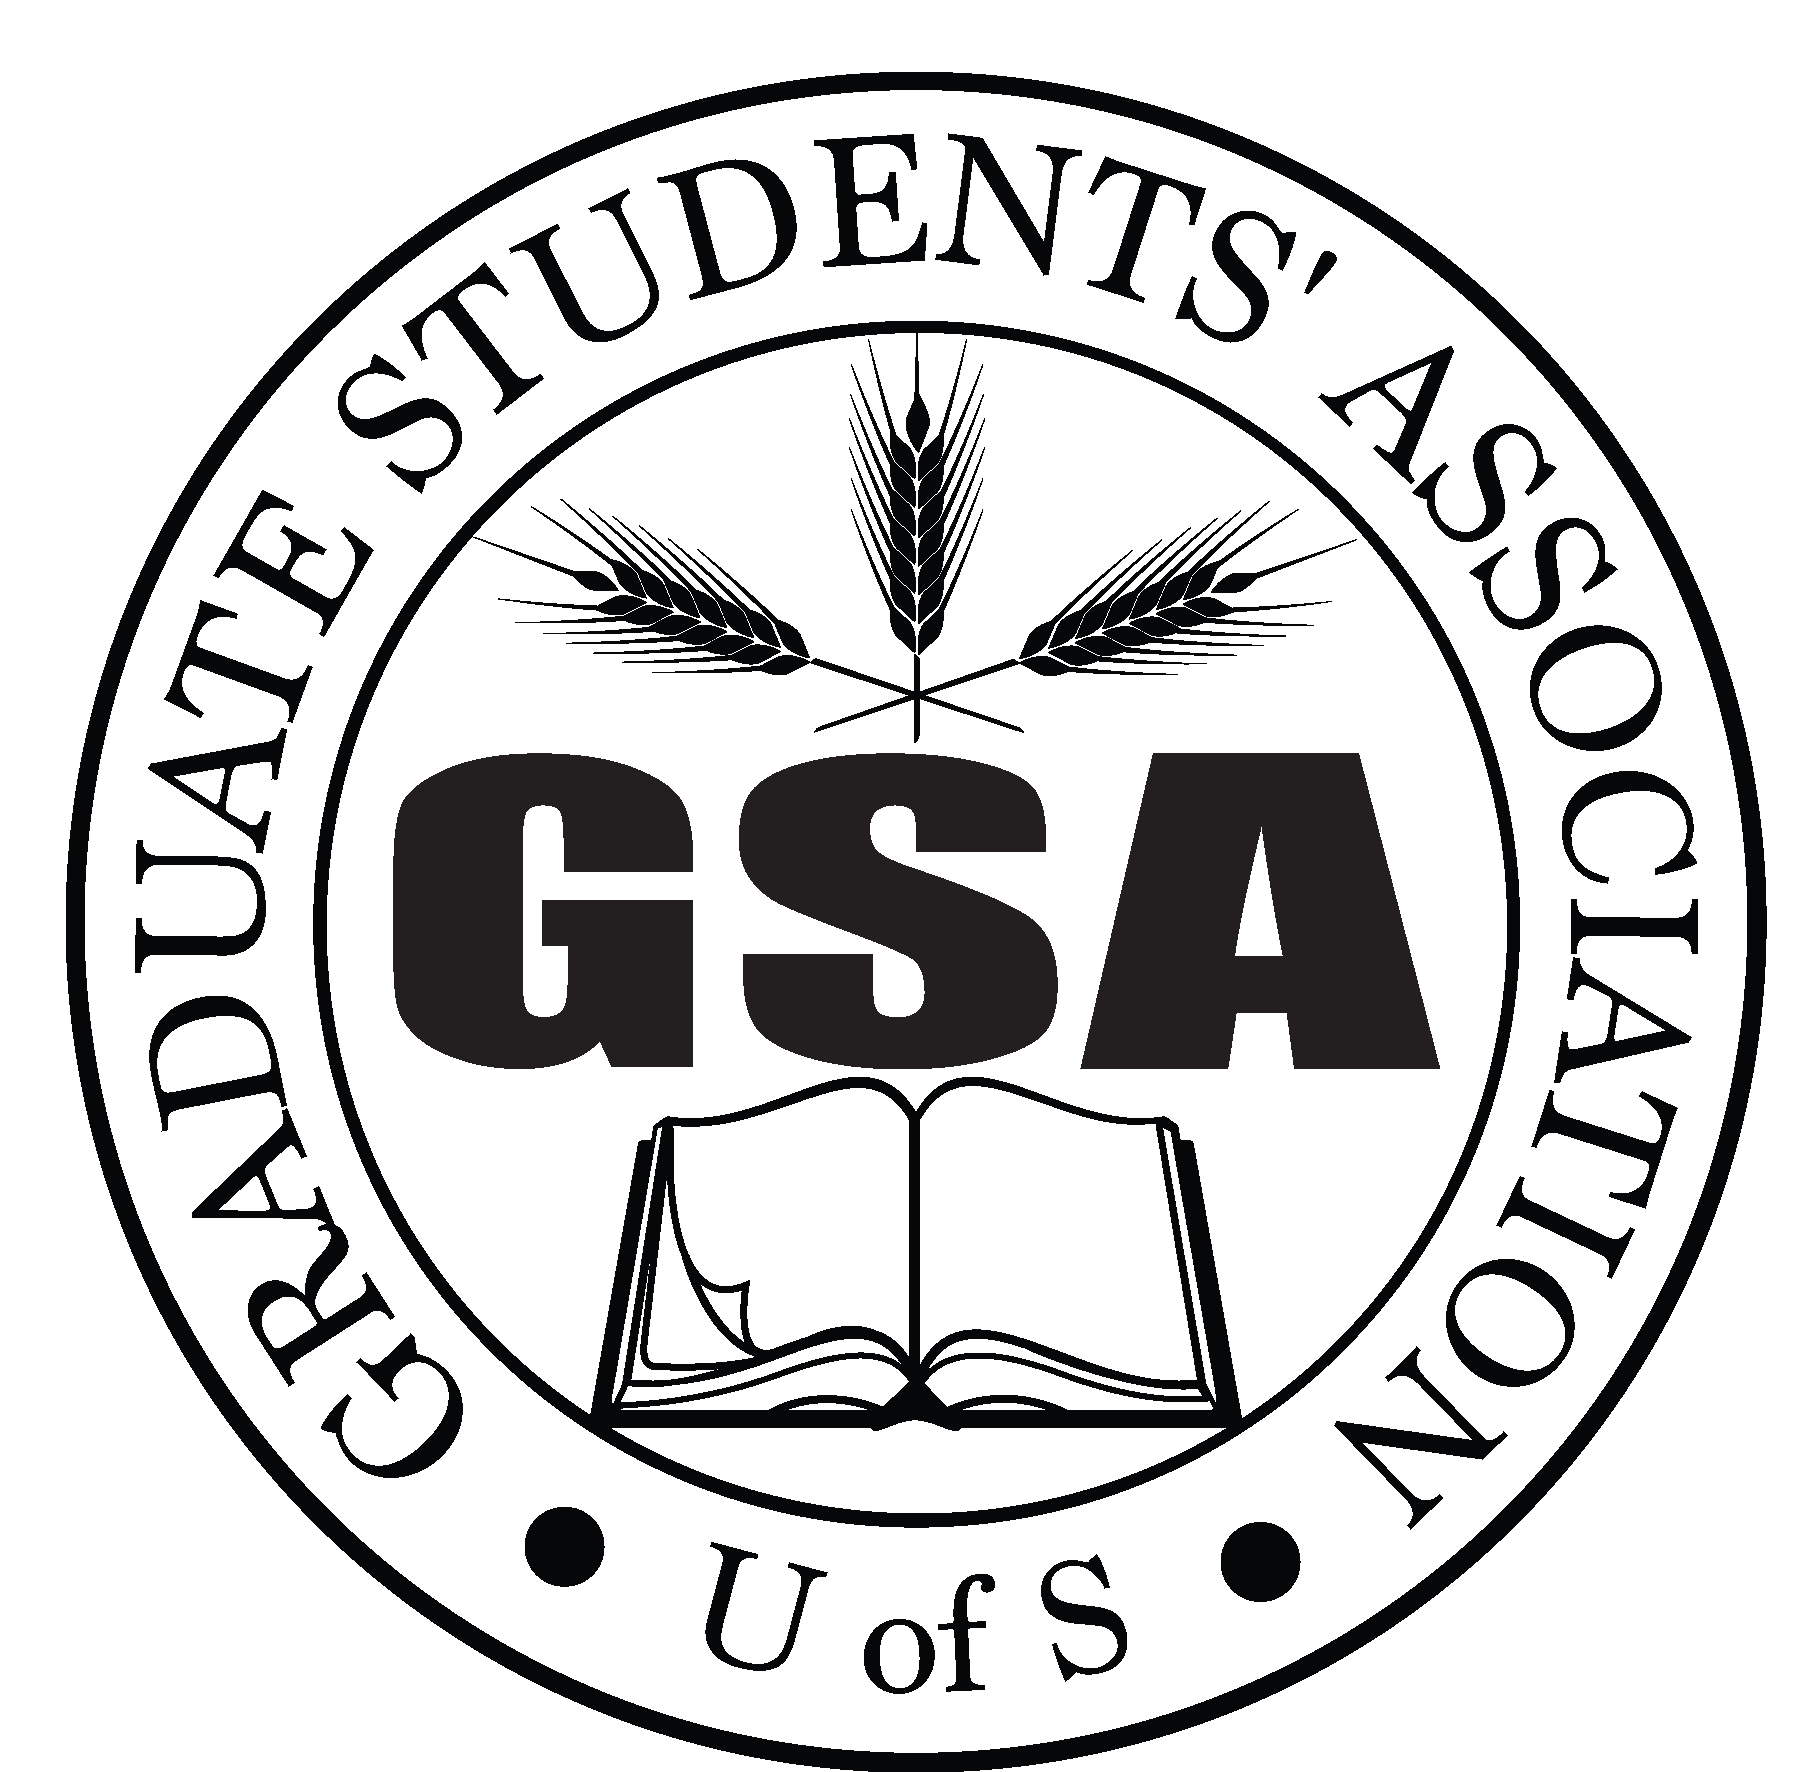 Graduate Students' Association